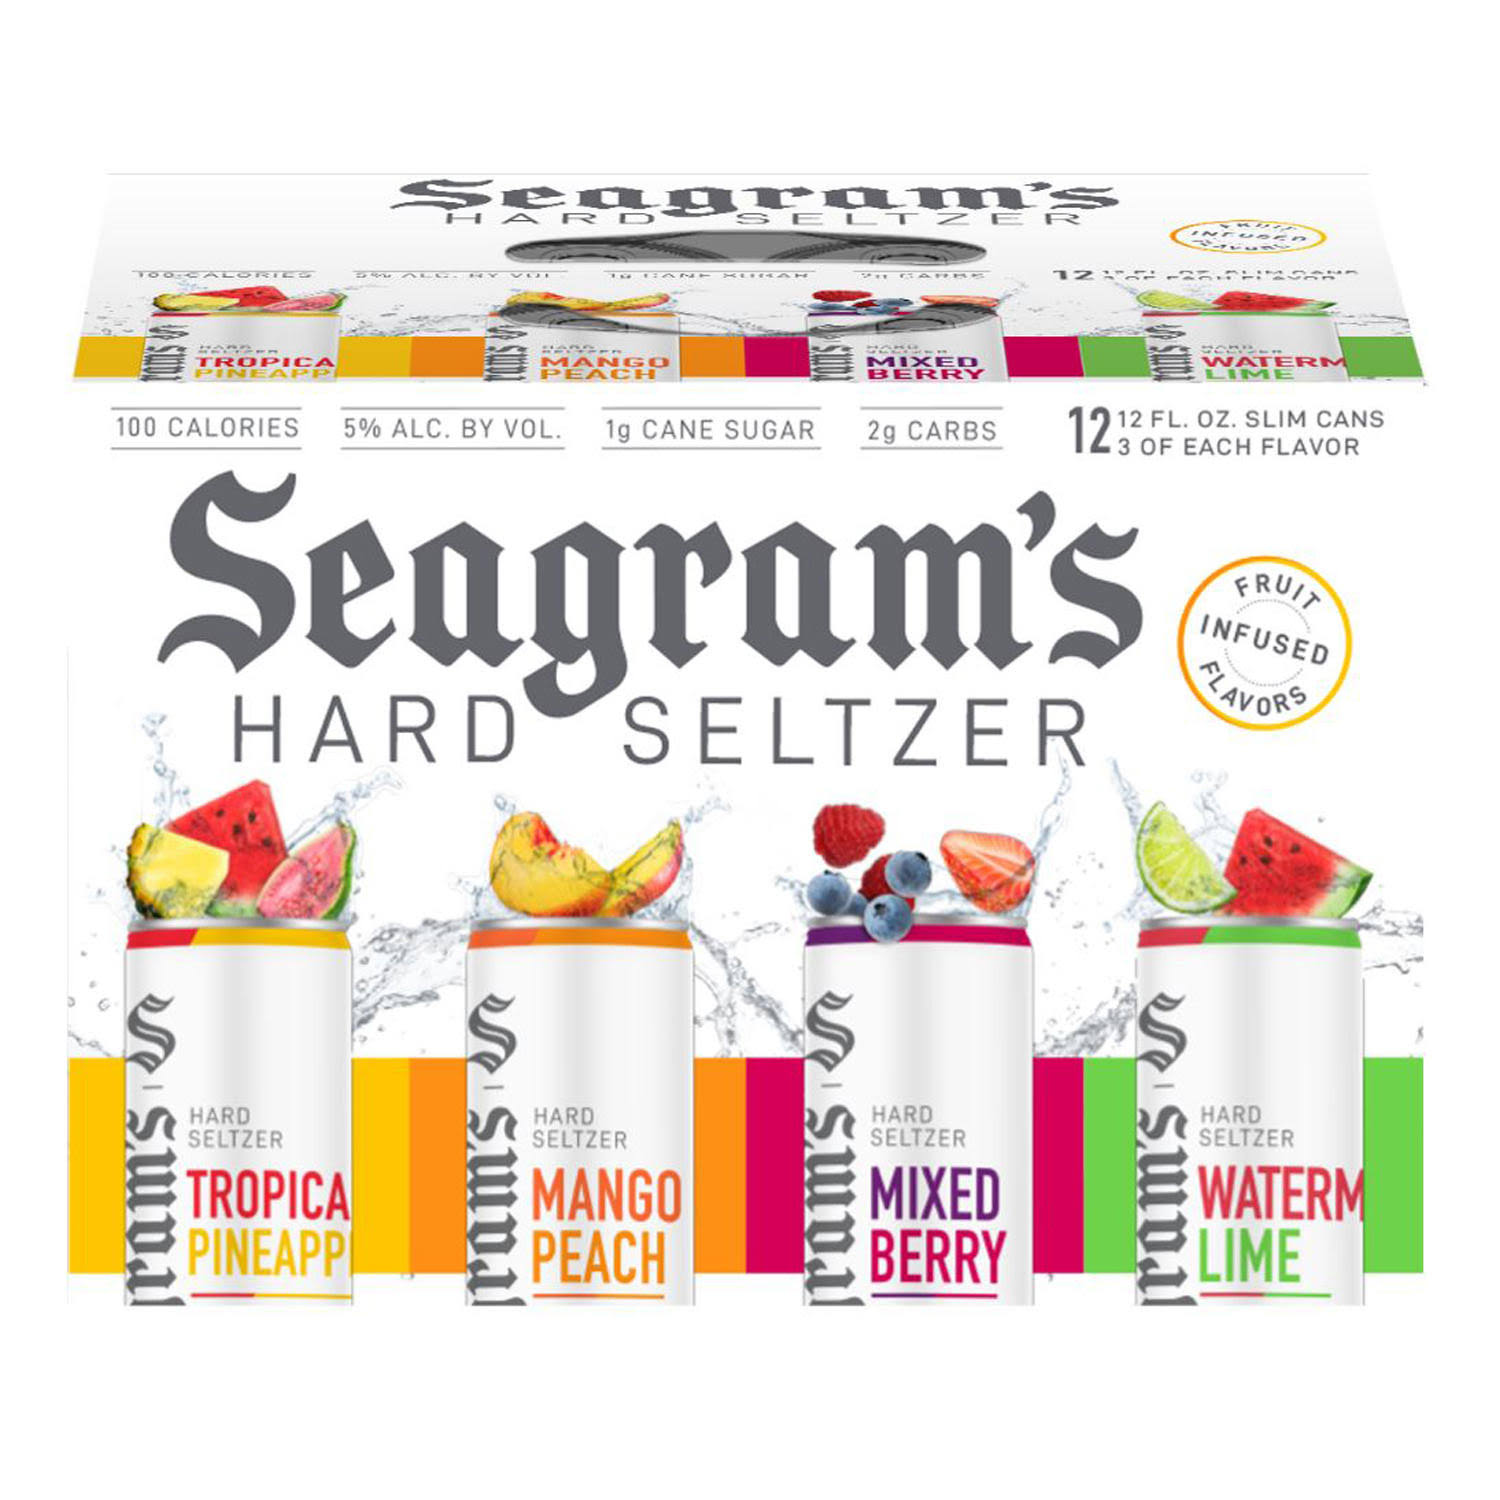 Seagram's Hard Seltzer - 12 fl oz